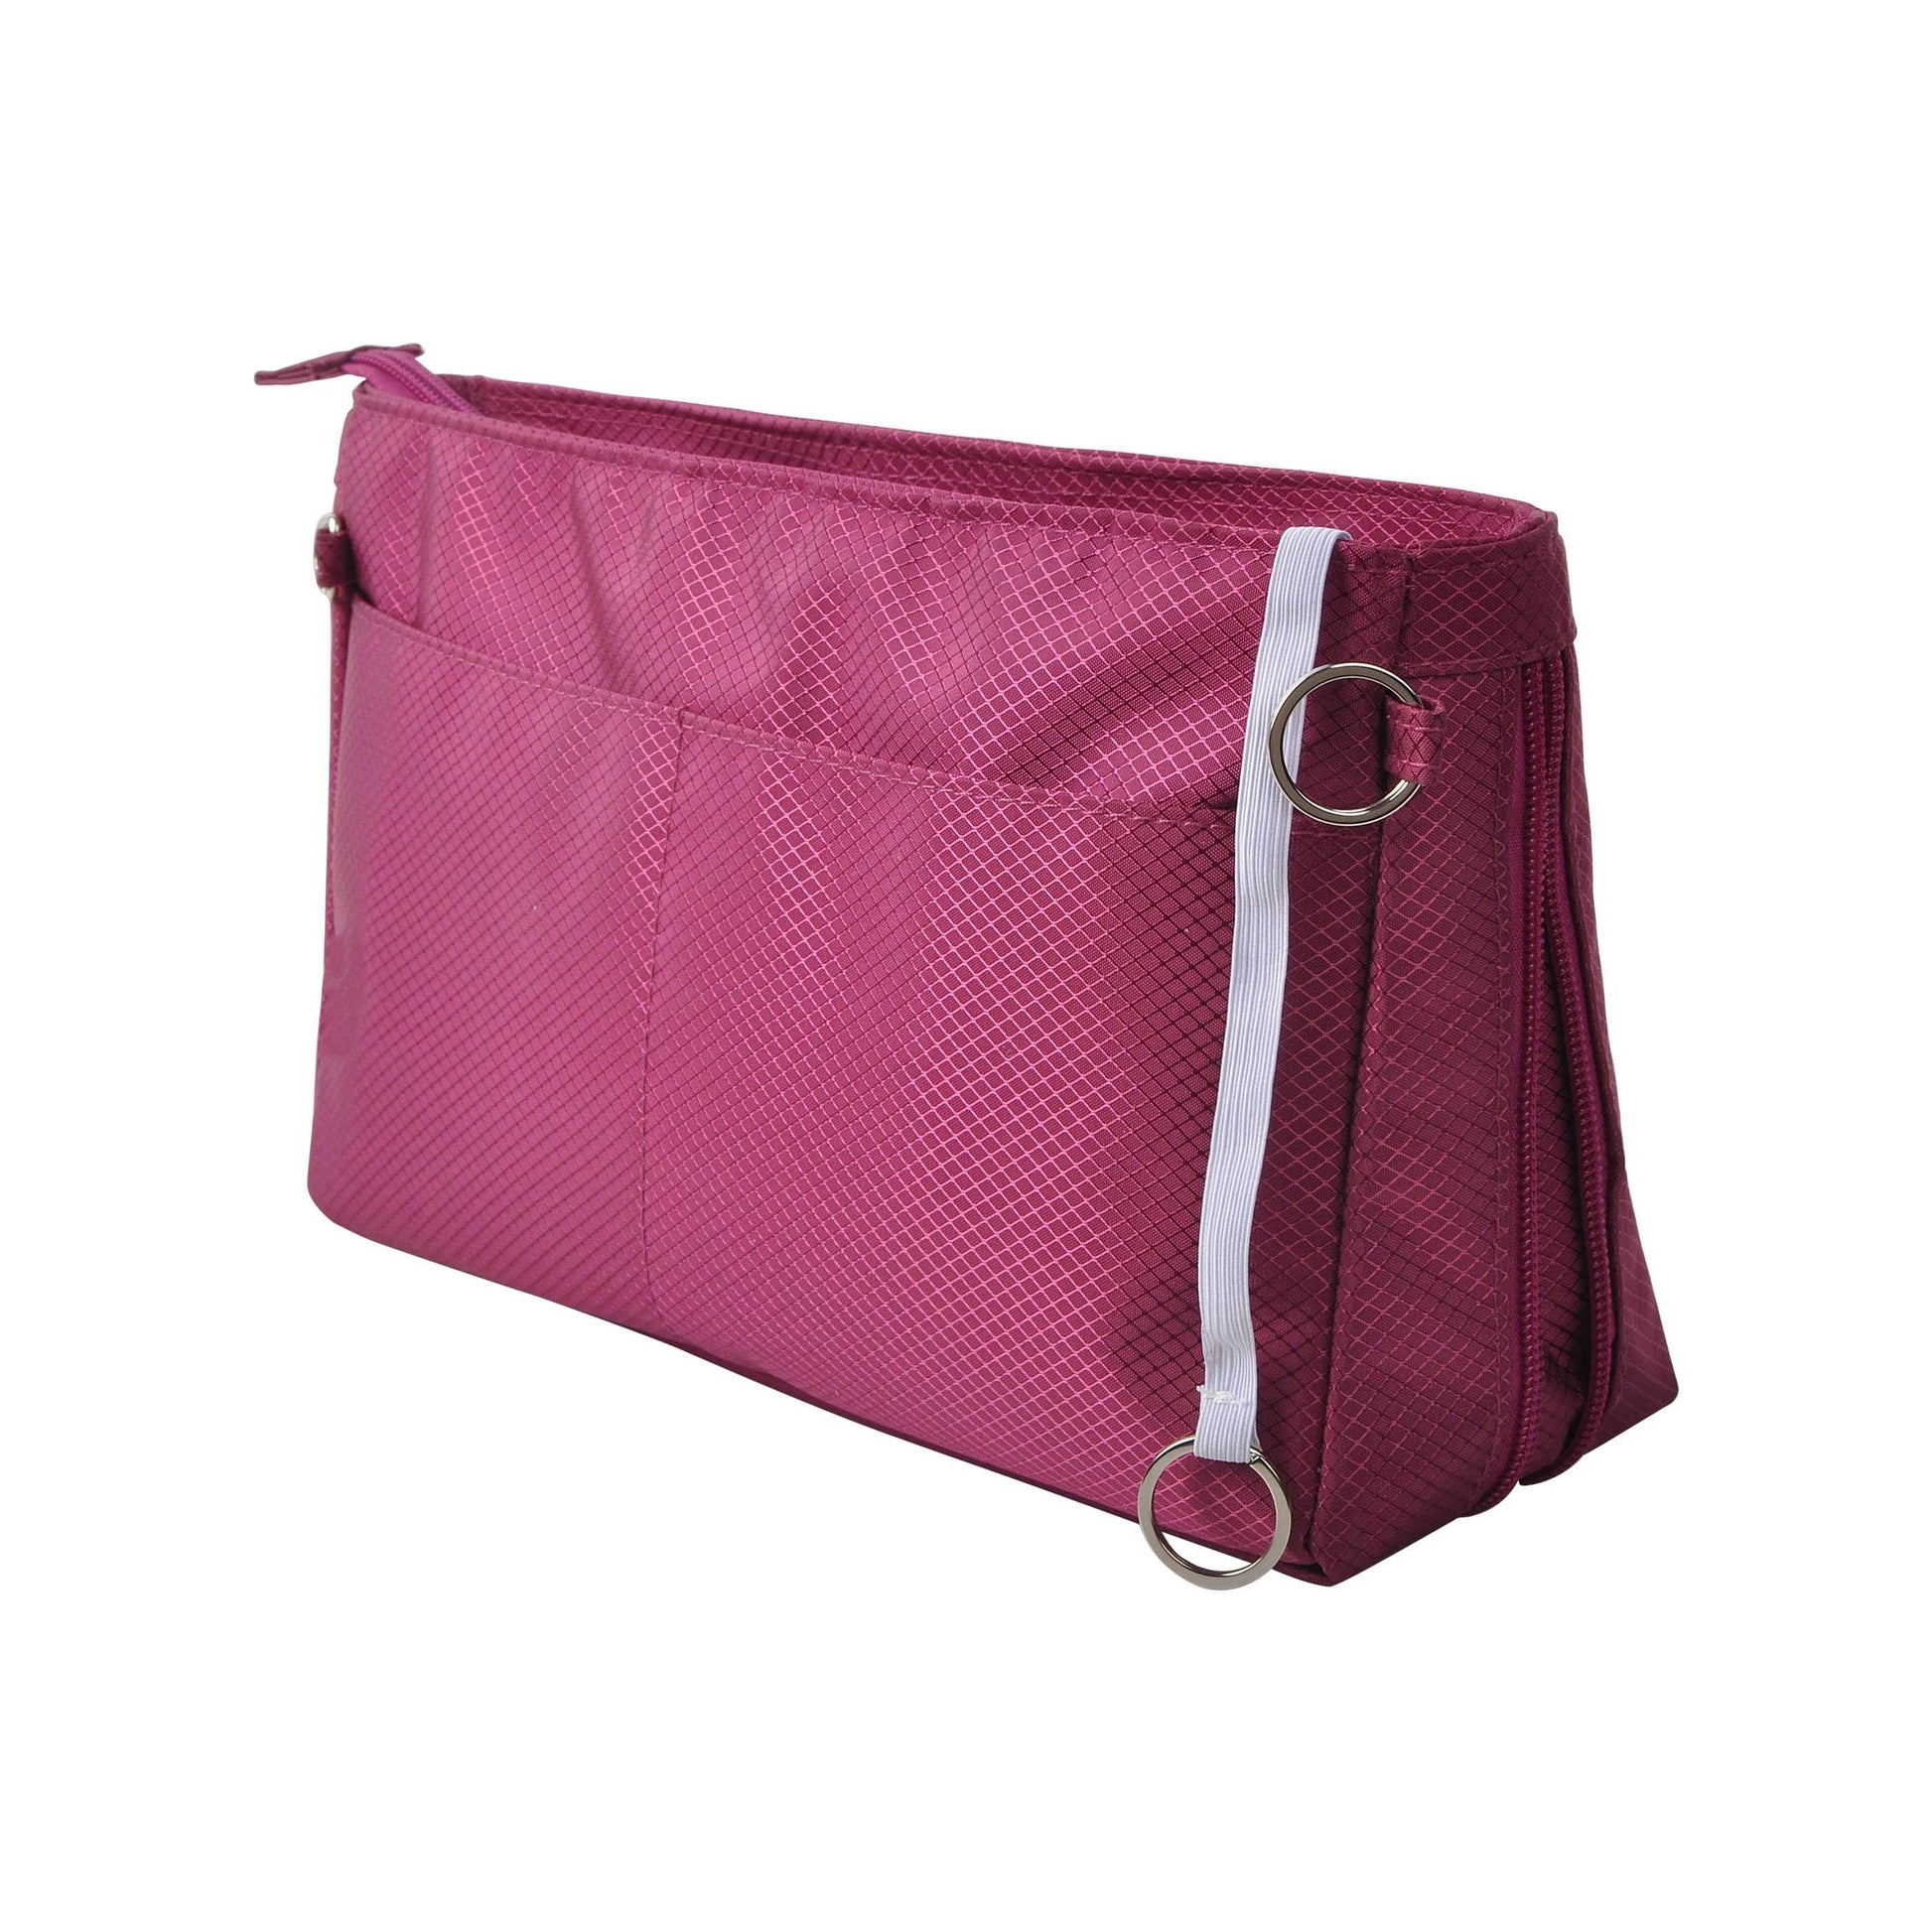 iN. Purse Organizer Insert with zipper Nylon fabric for women Handbags &  Totebag